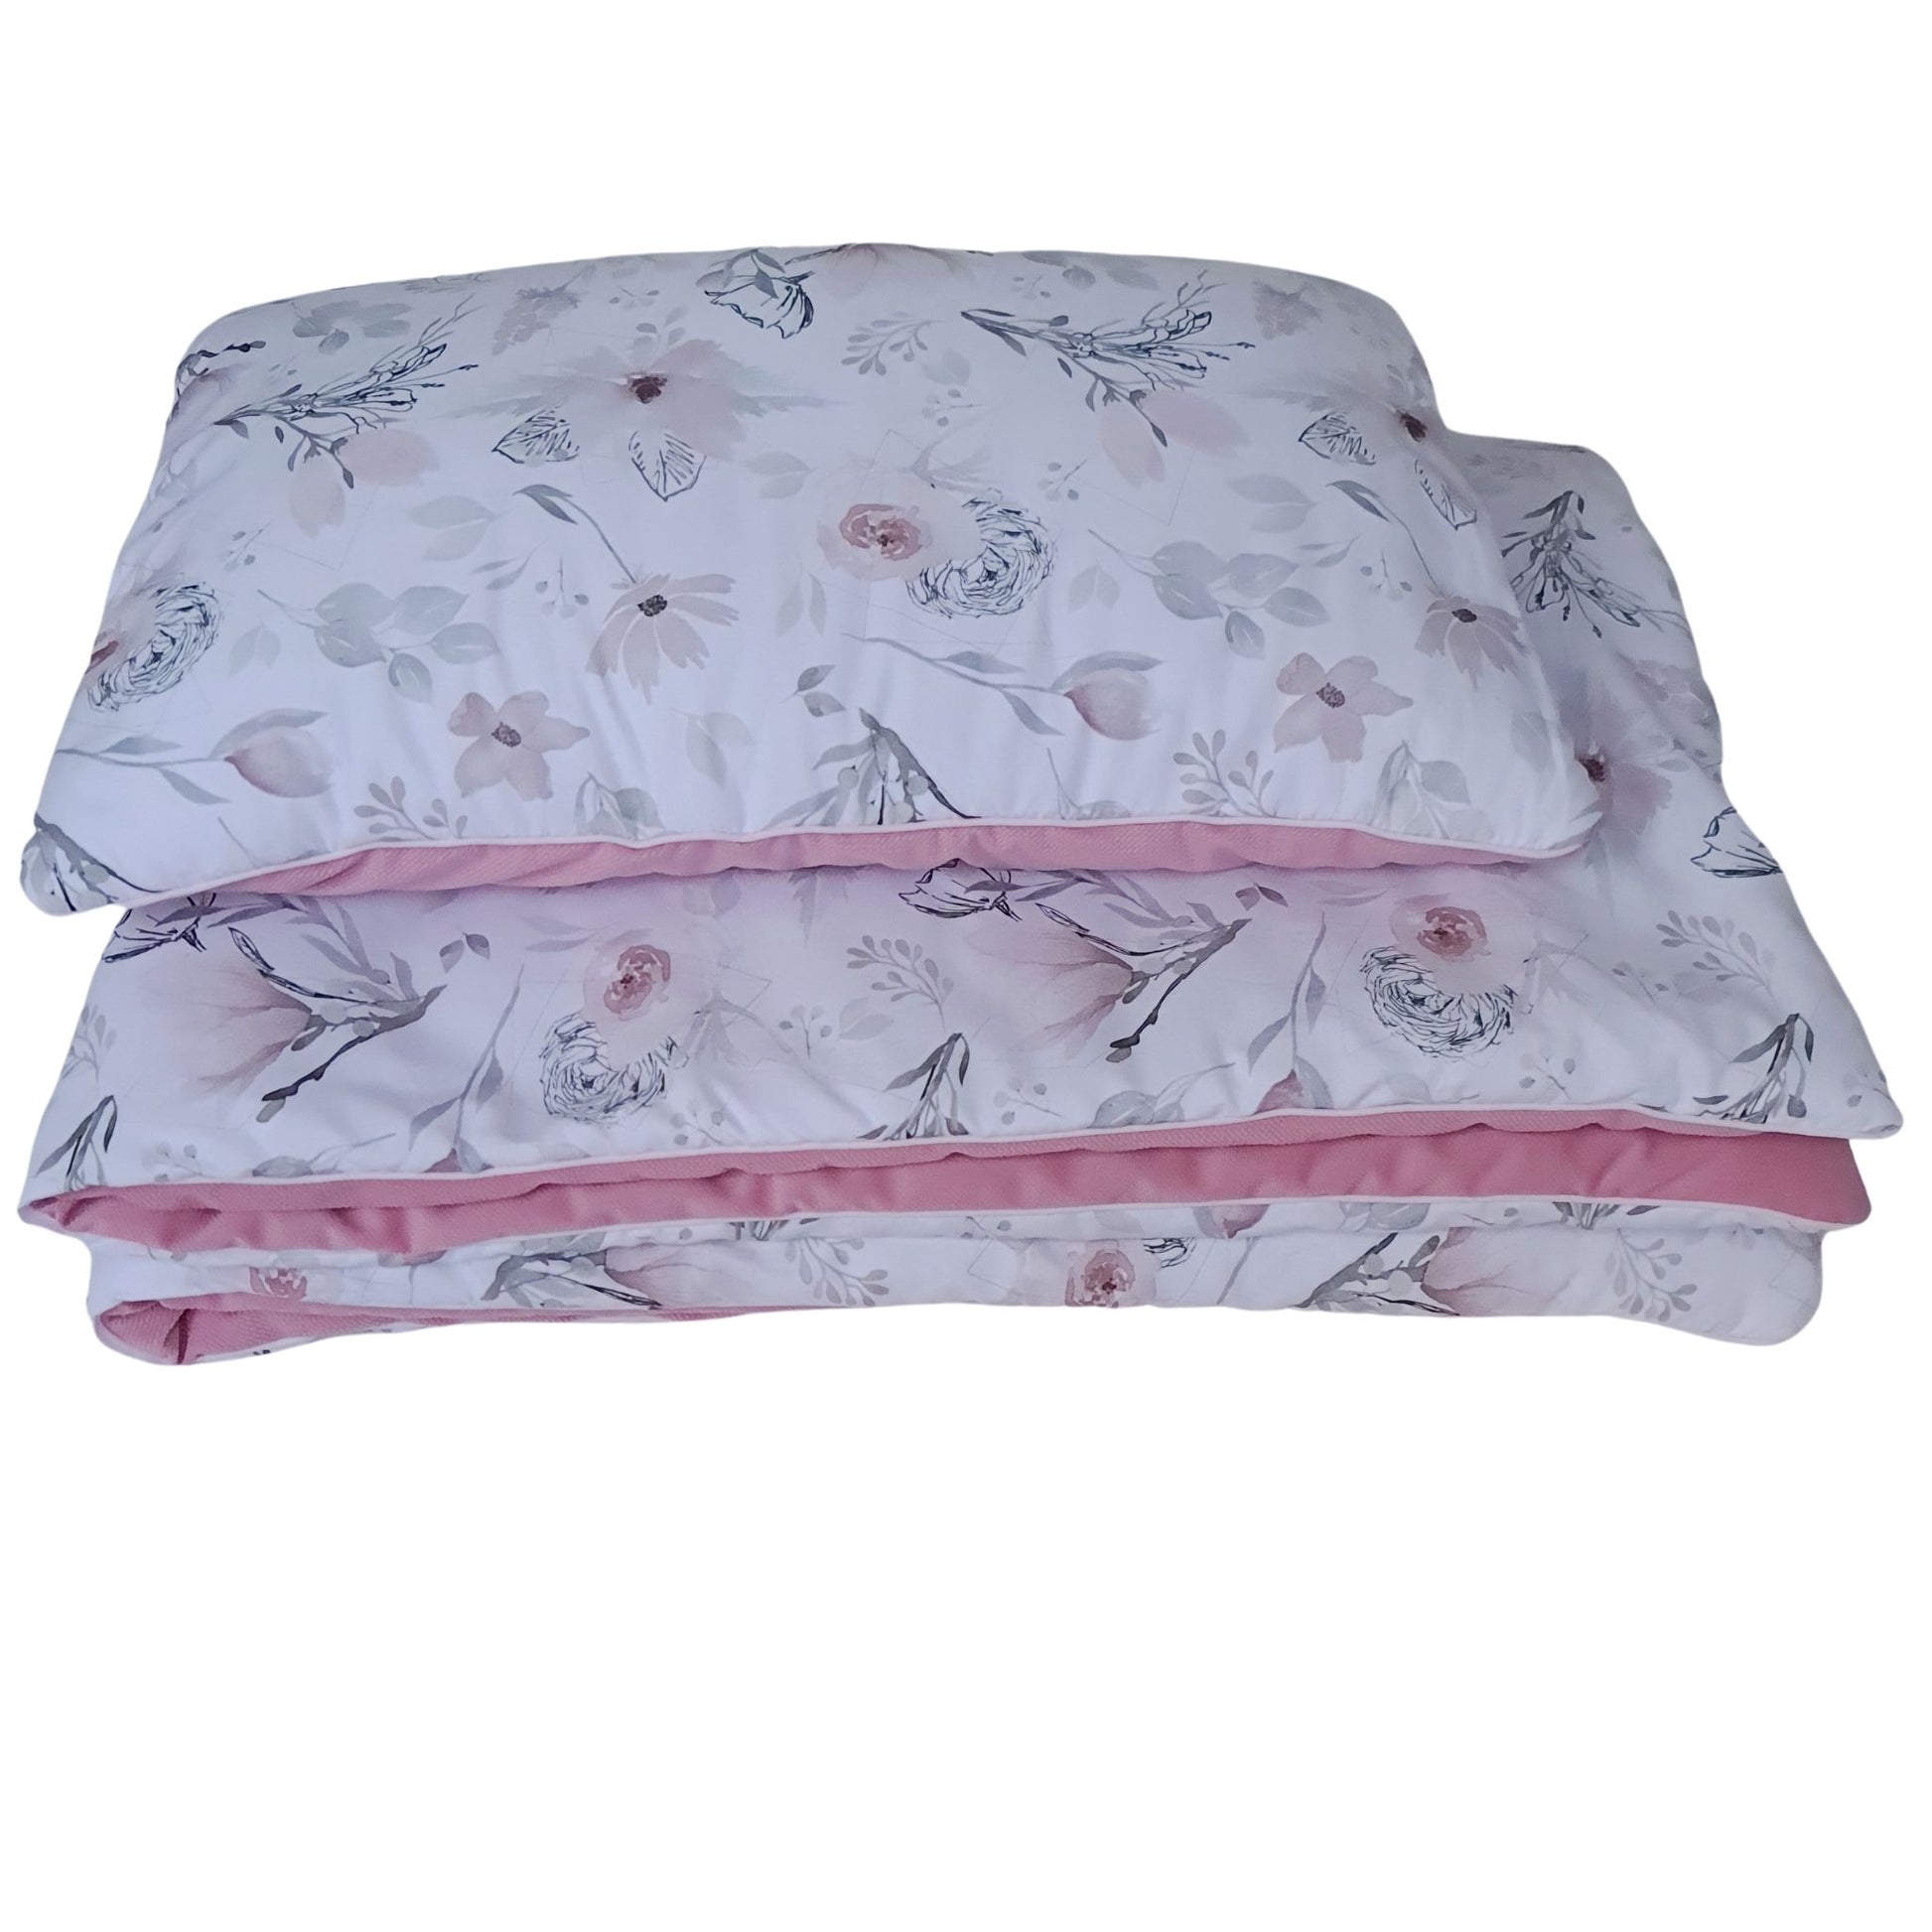 evcushy bedding sets for children in Ireland cotton velvet pink floral pattern